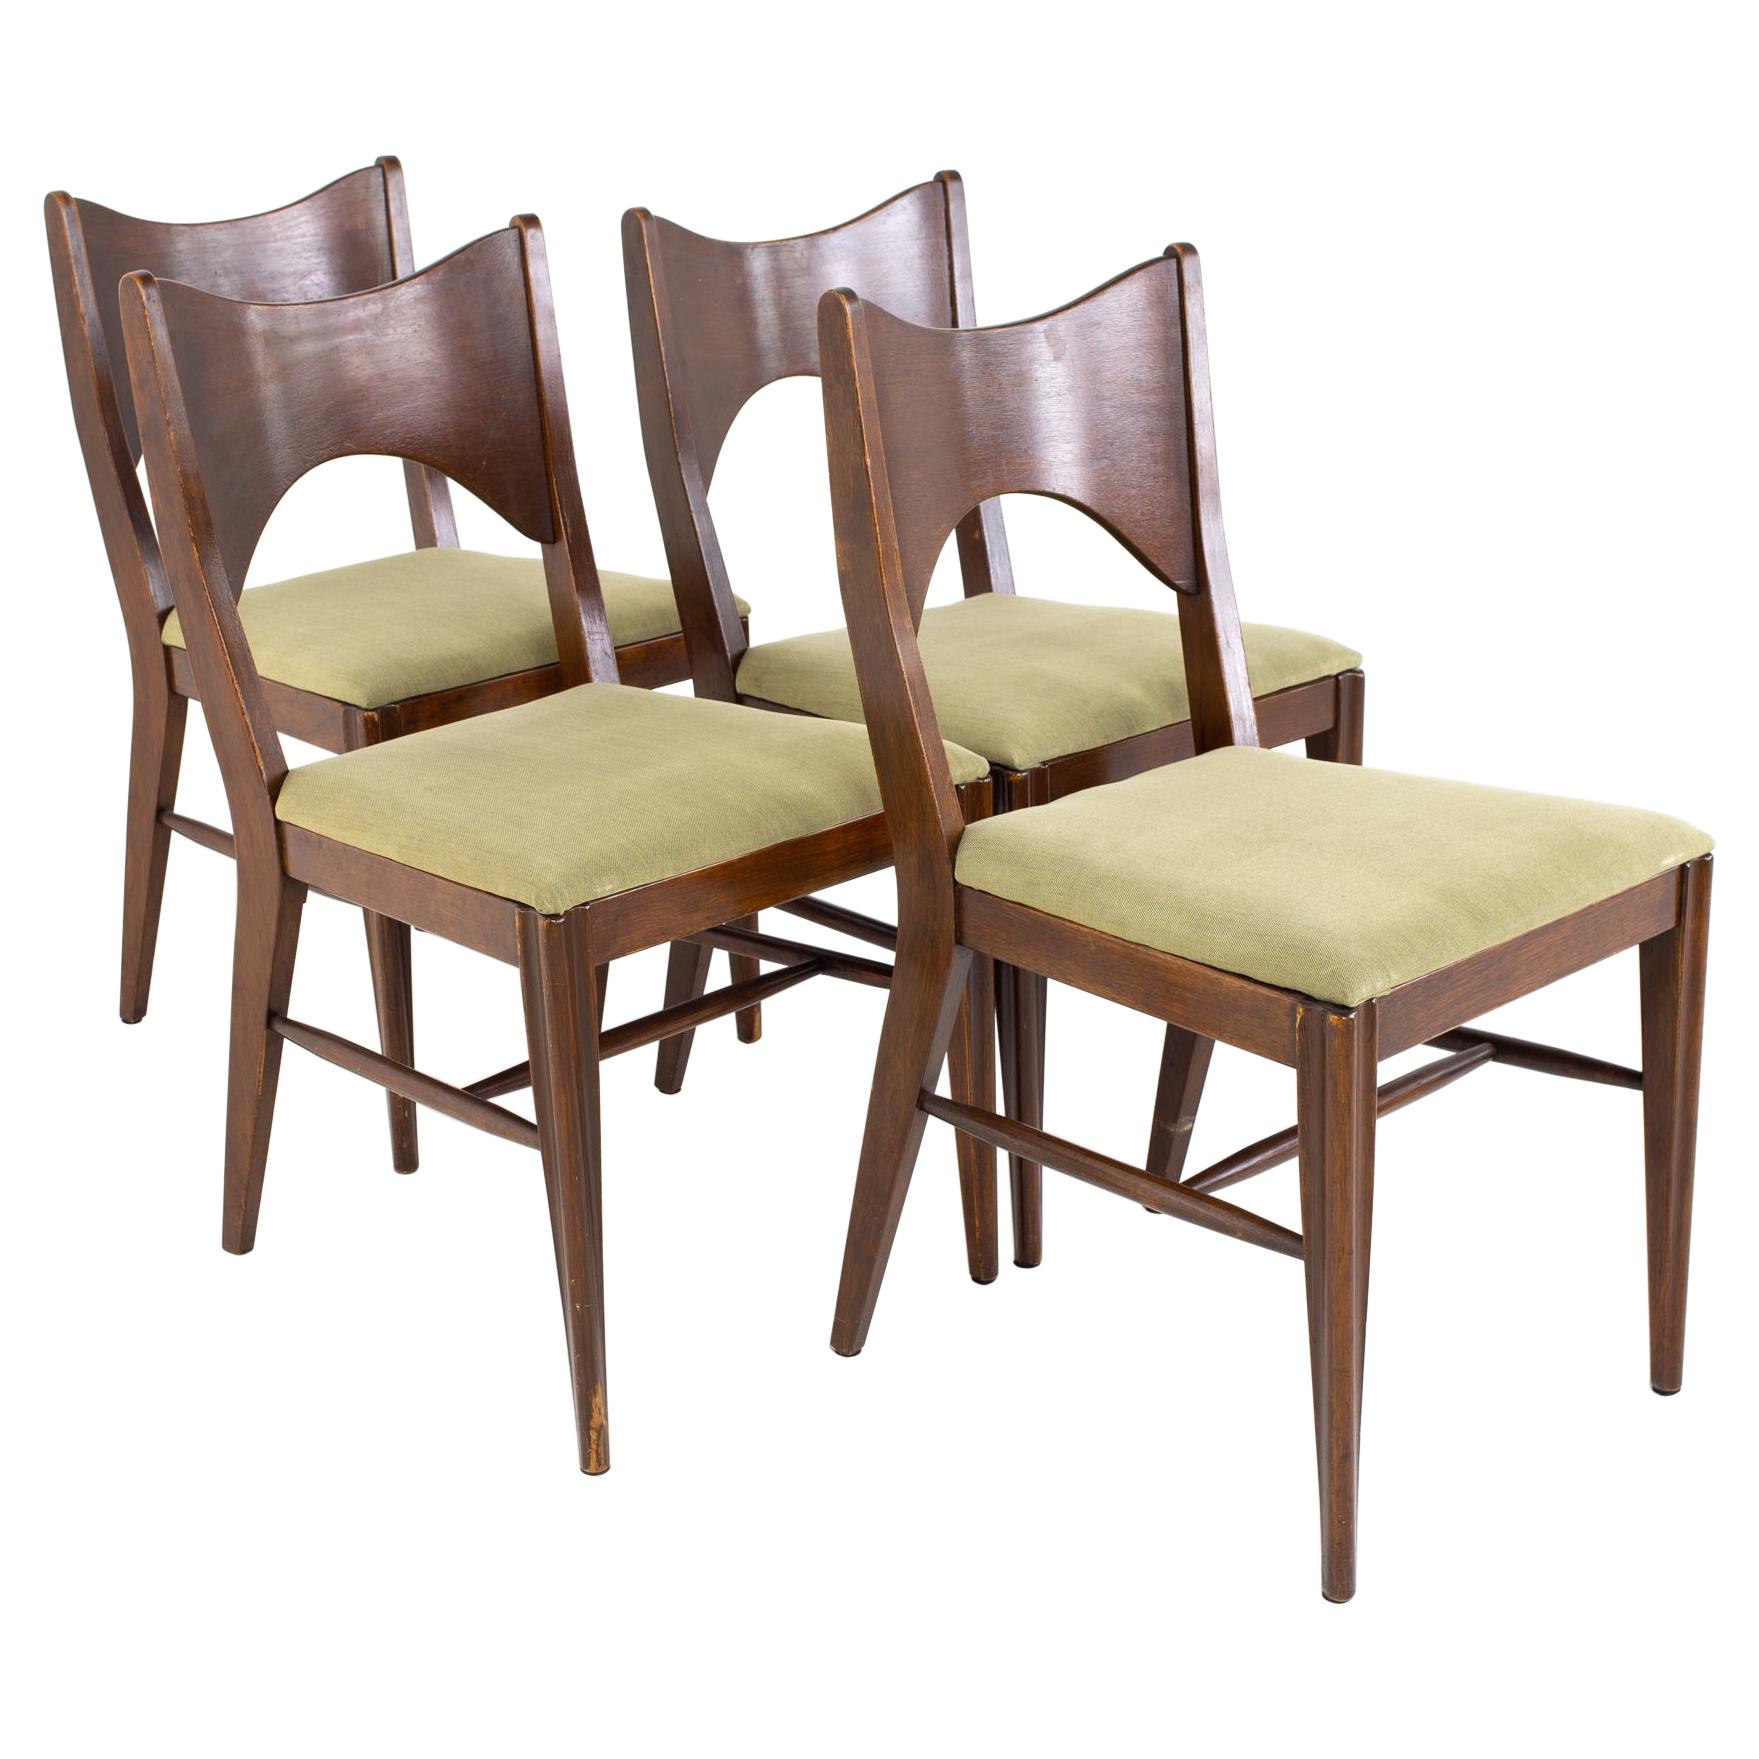 Broyhill Saga Mid Century Dining Chairs, Set of 4